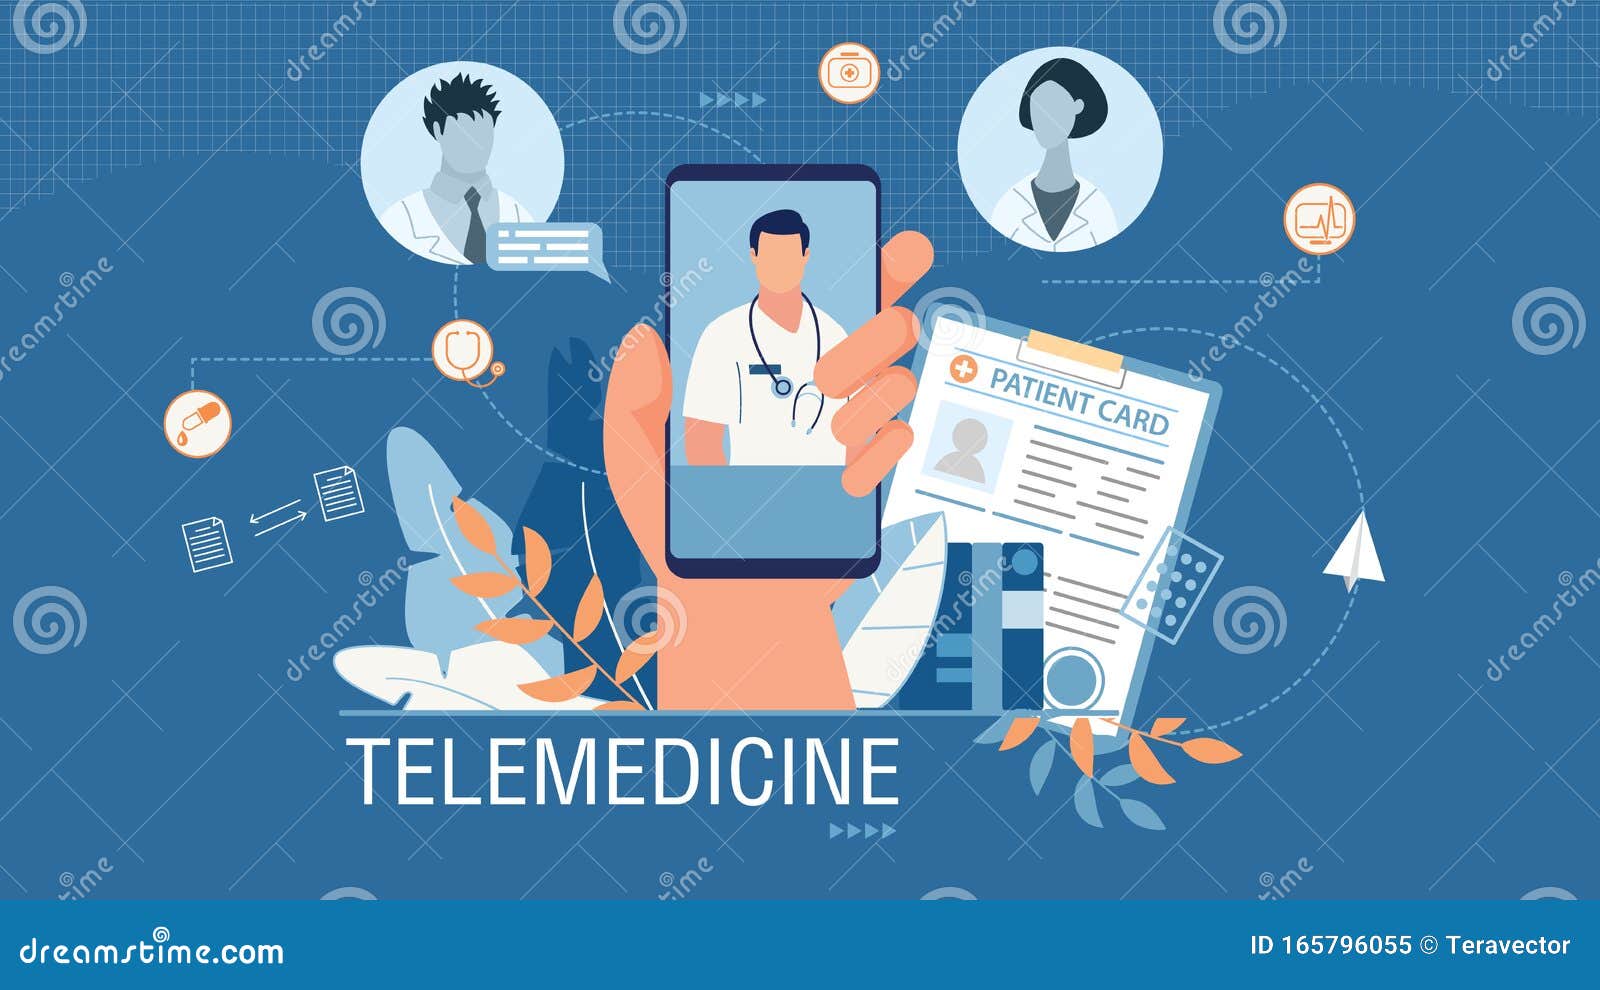 Premium Vector  Telemedicine concept banner with patient visiting